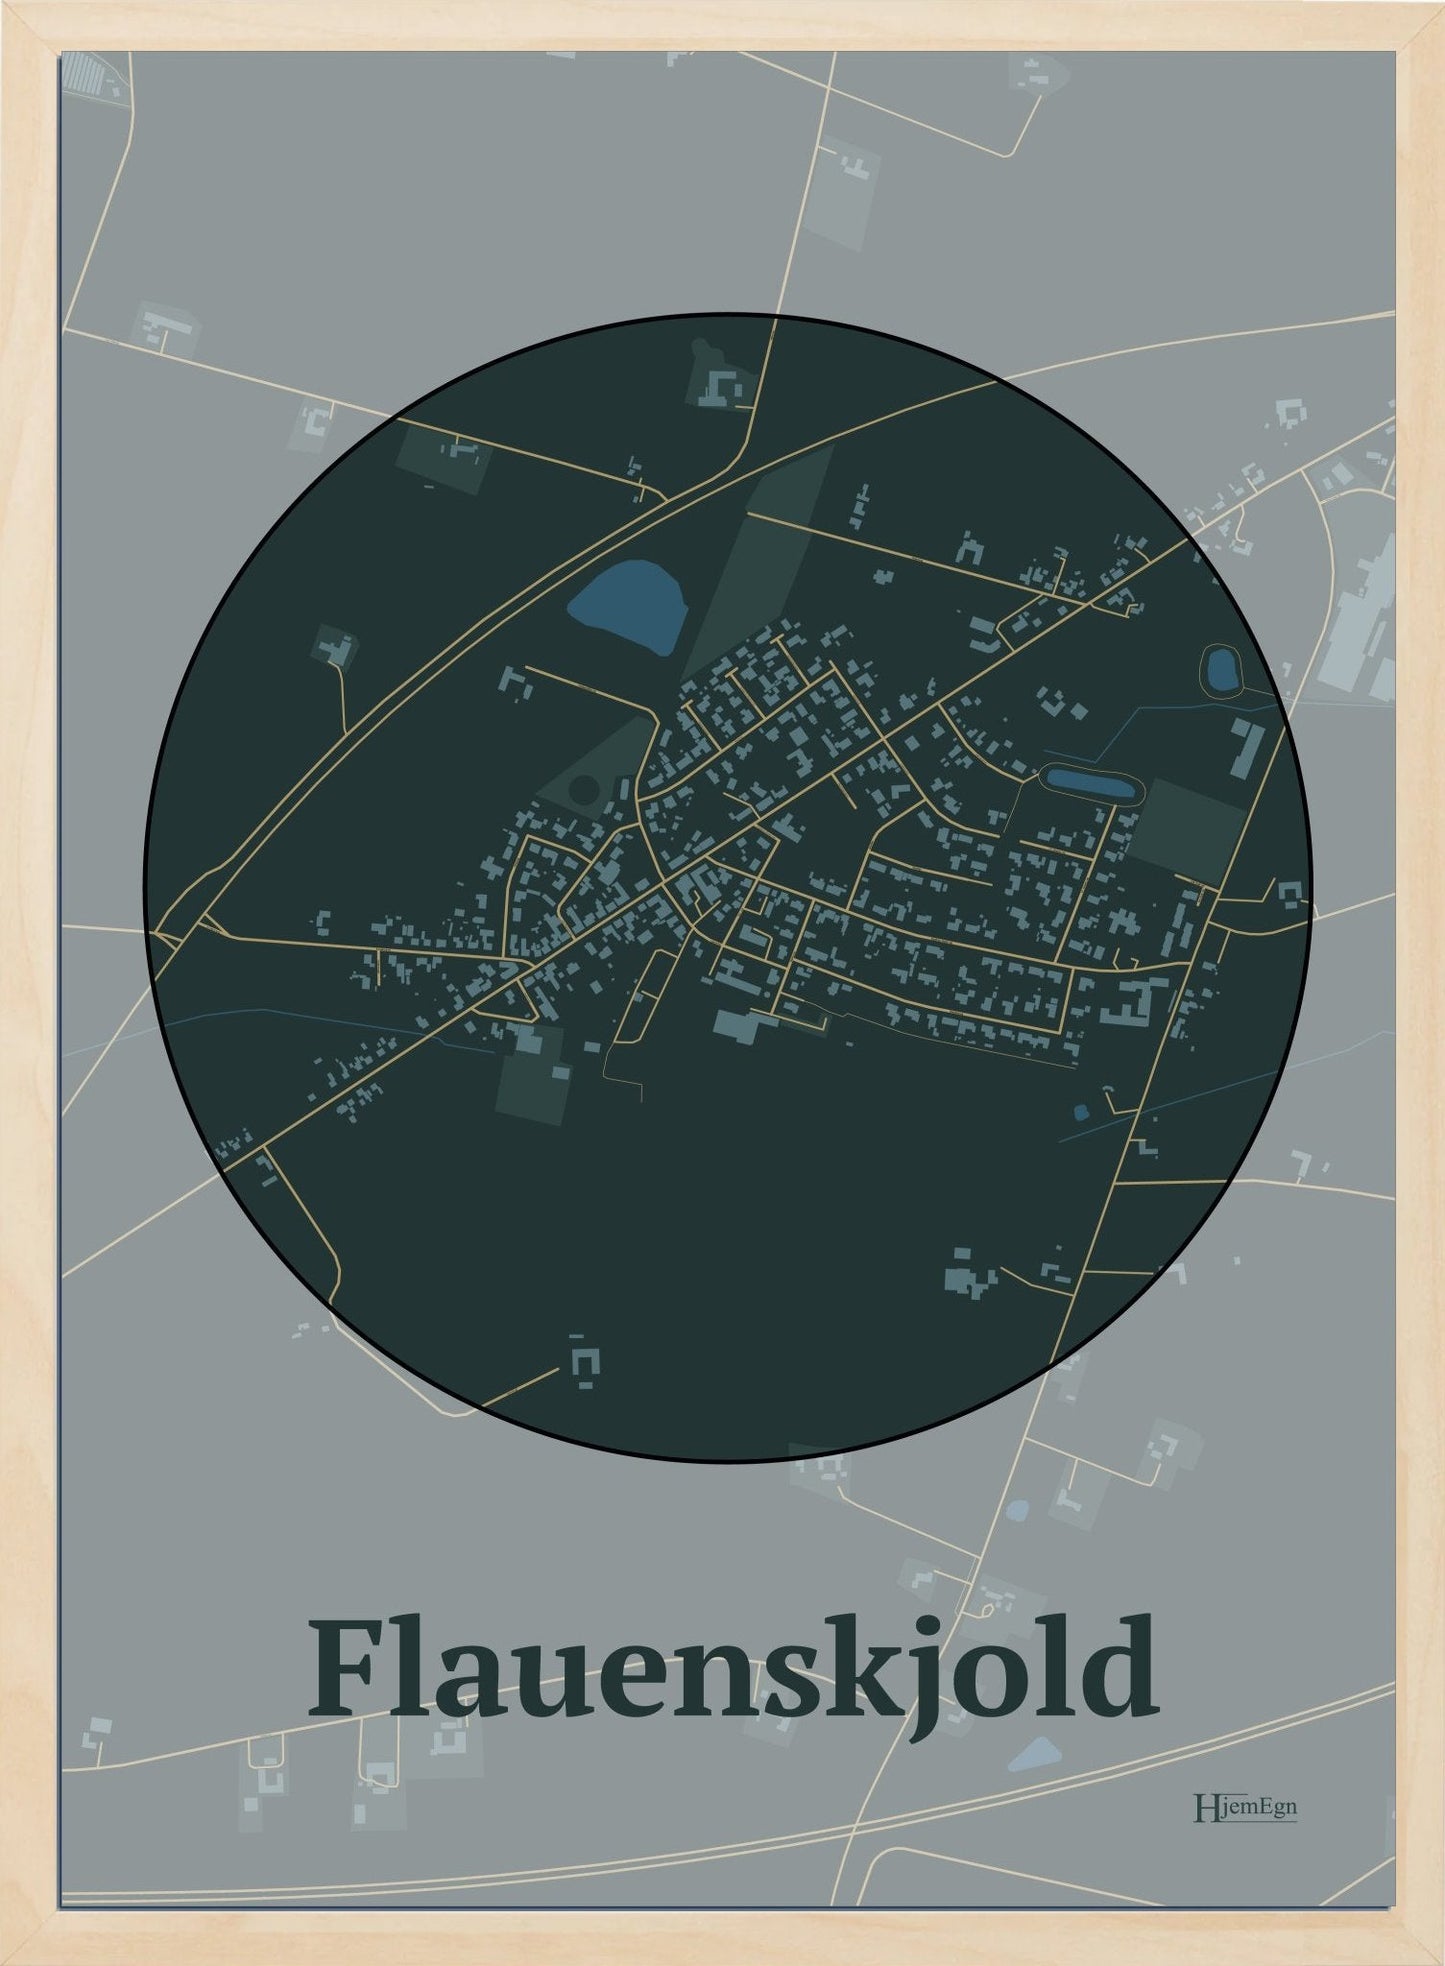 Flauenskjold plakat i farve mørk grøn og HjemEgn.dk design centrum. Design bykort for Flauenskjold